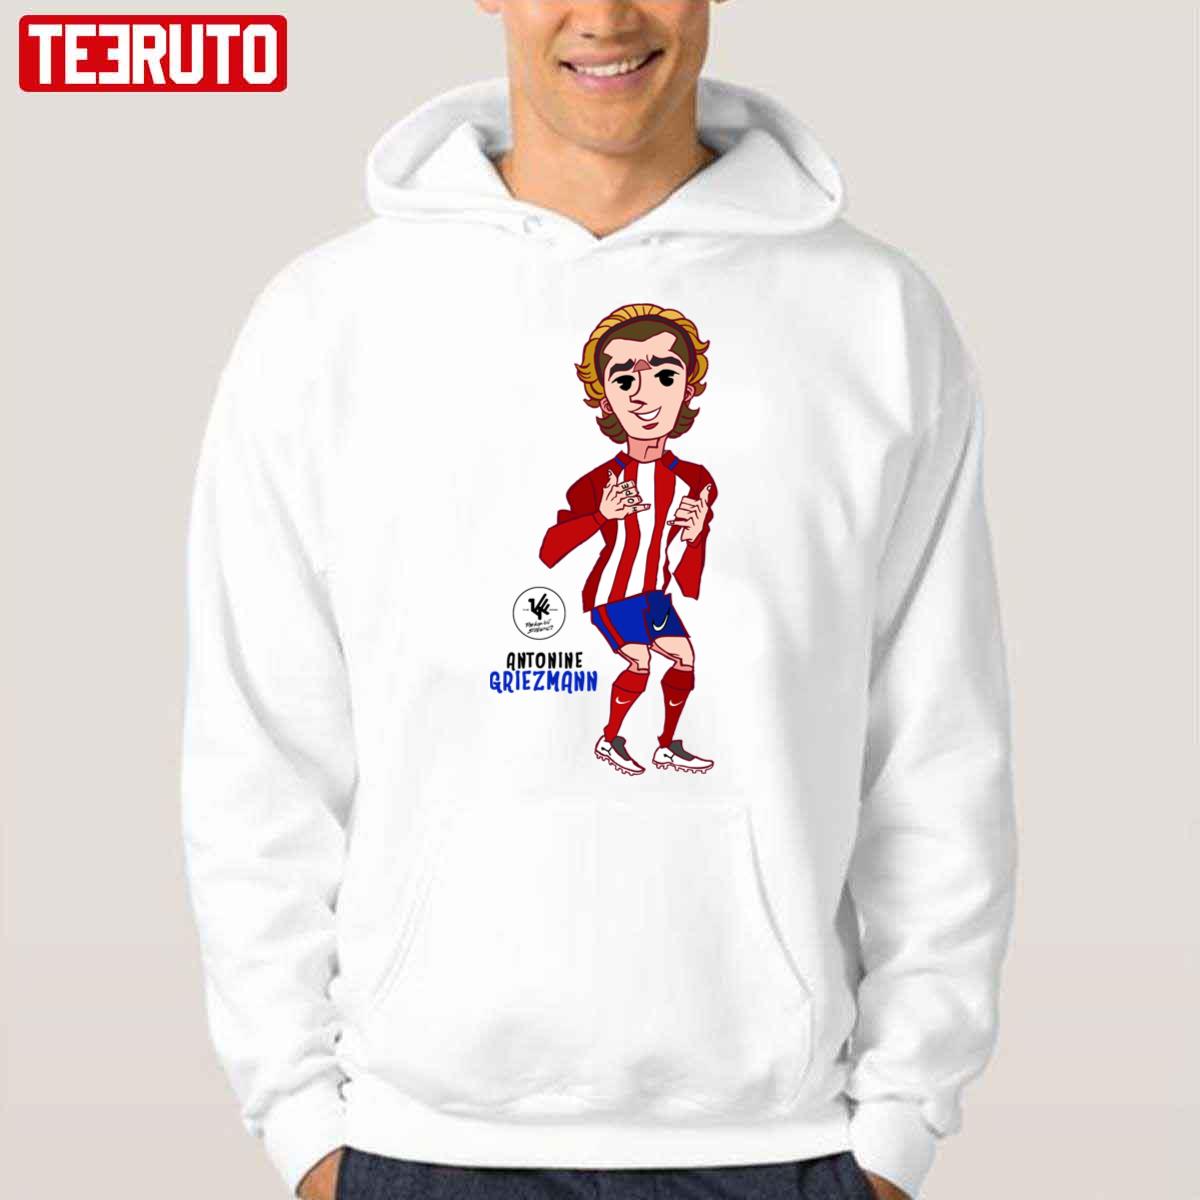 Funny Chibi Antoine Griezmann Love Football Unisex T-Shirt